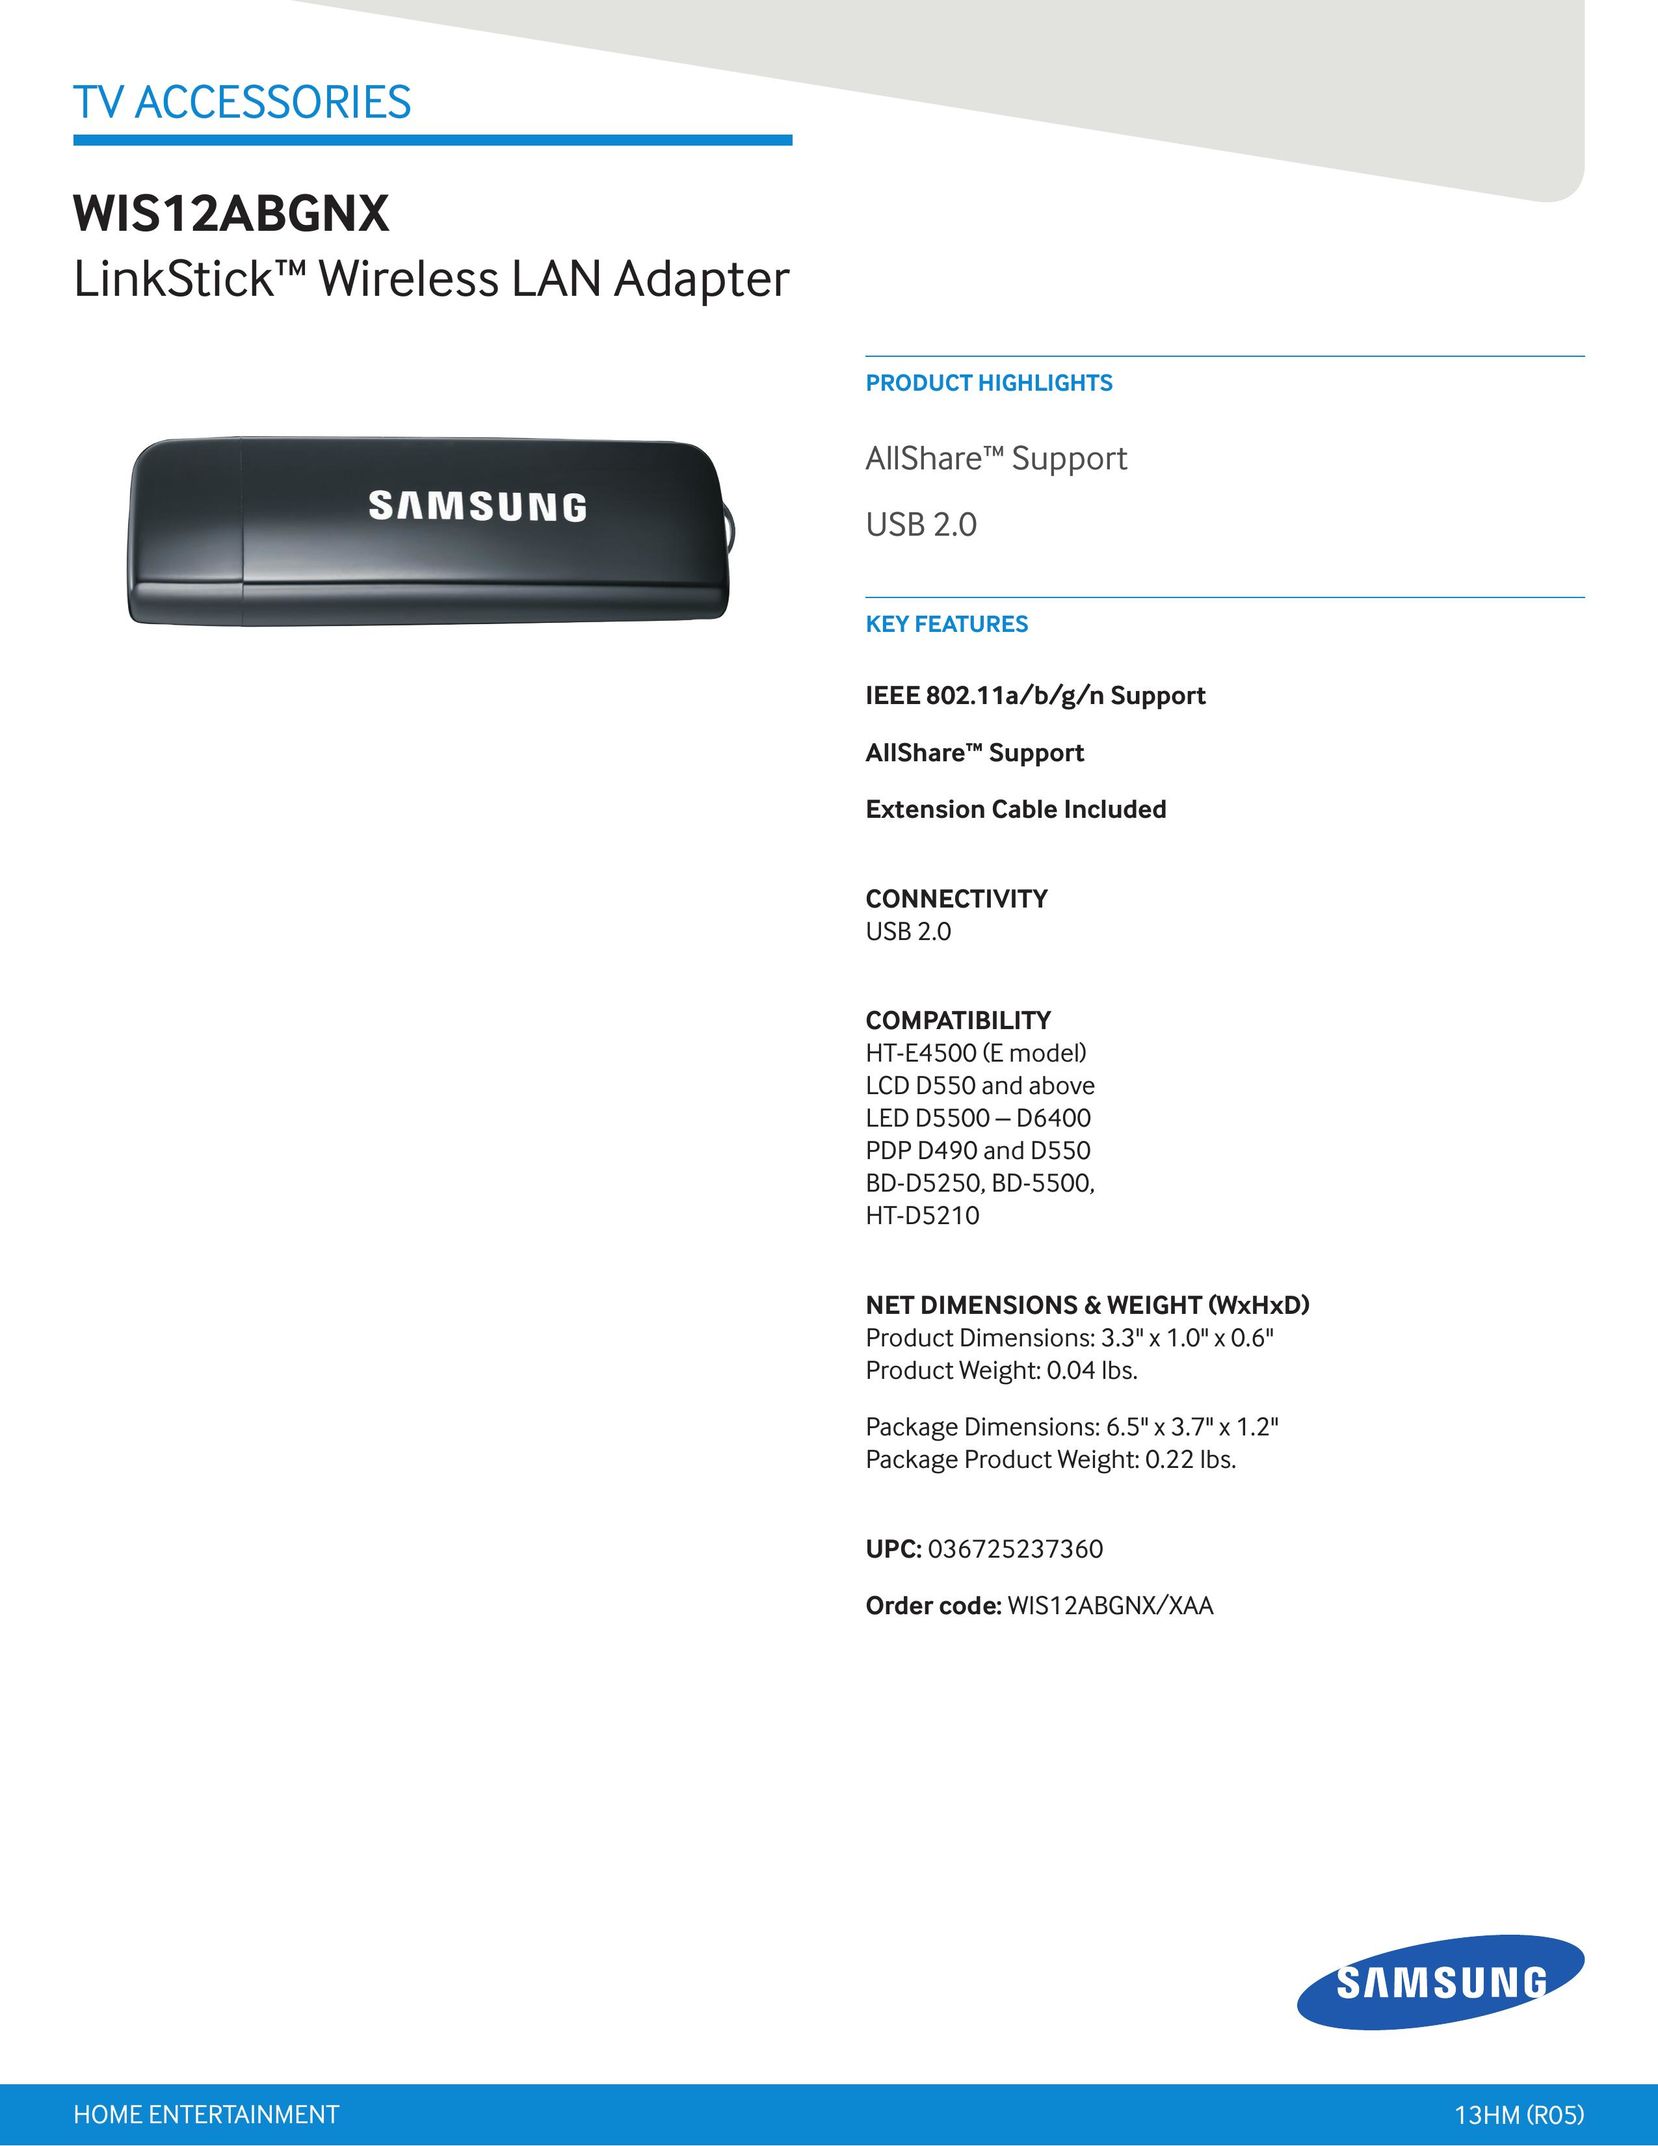 Samsung WIS12ABGNX Network Hardware User Manual